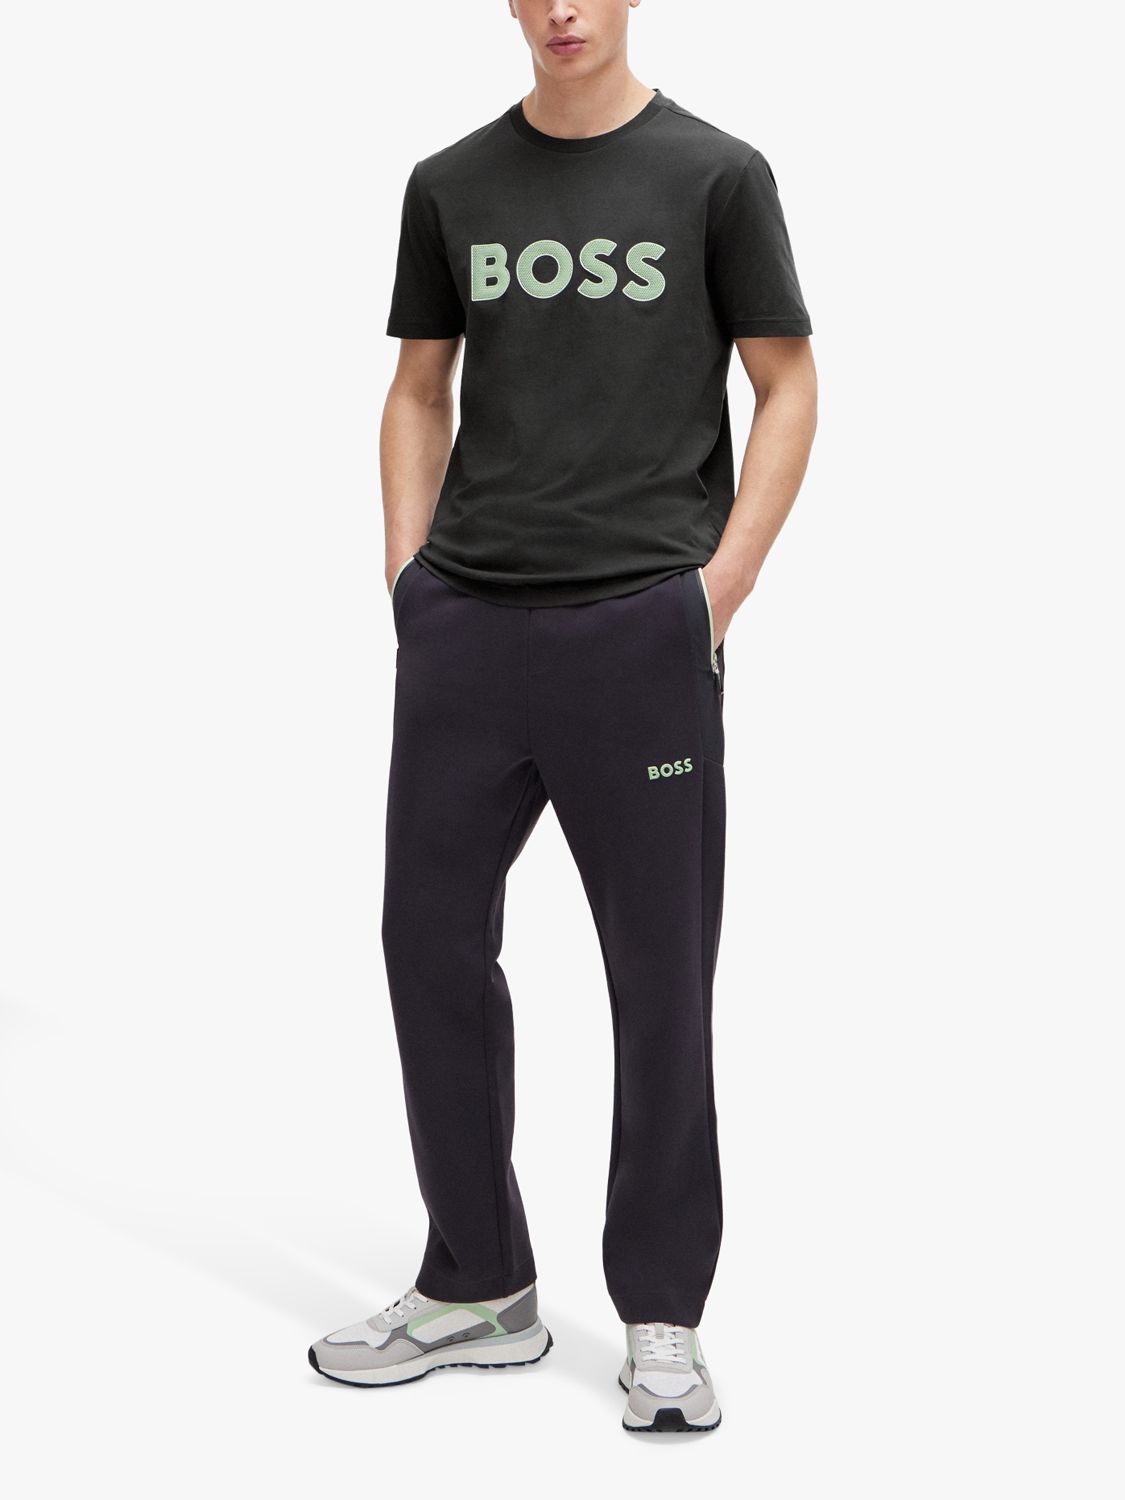 BOSS Large 3D Mesh Logo T-Shirt, Charcoal, XL